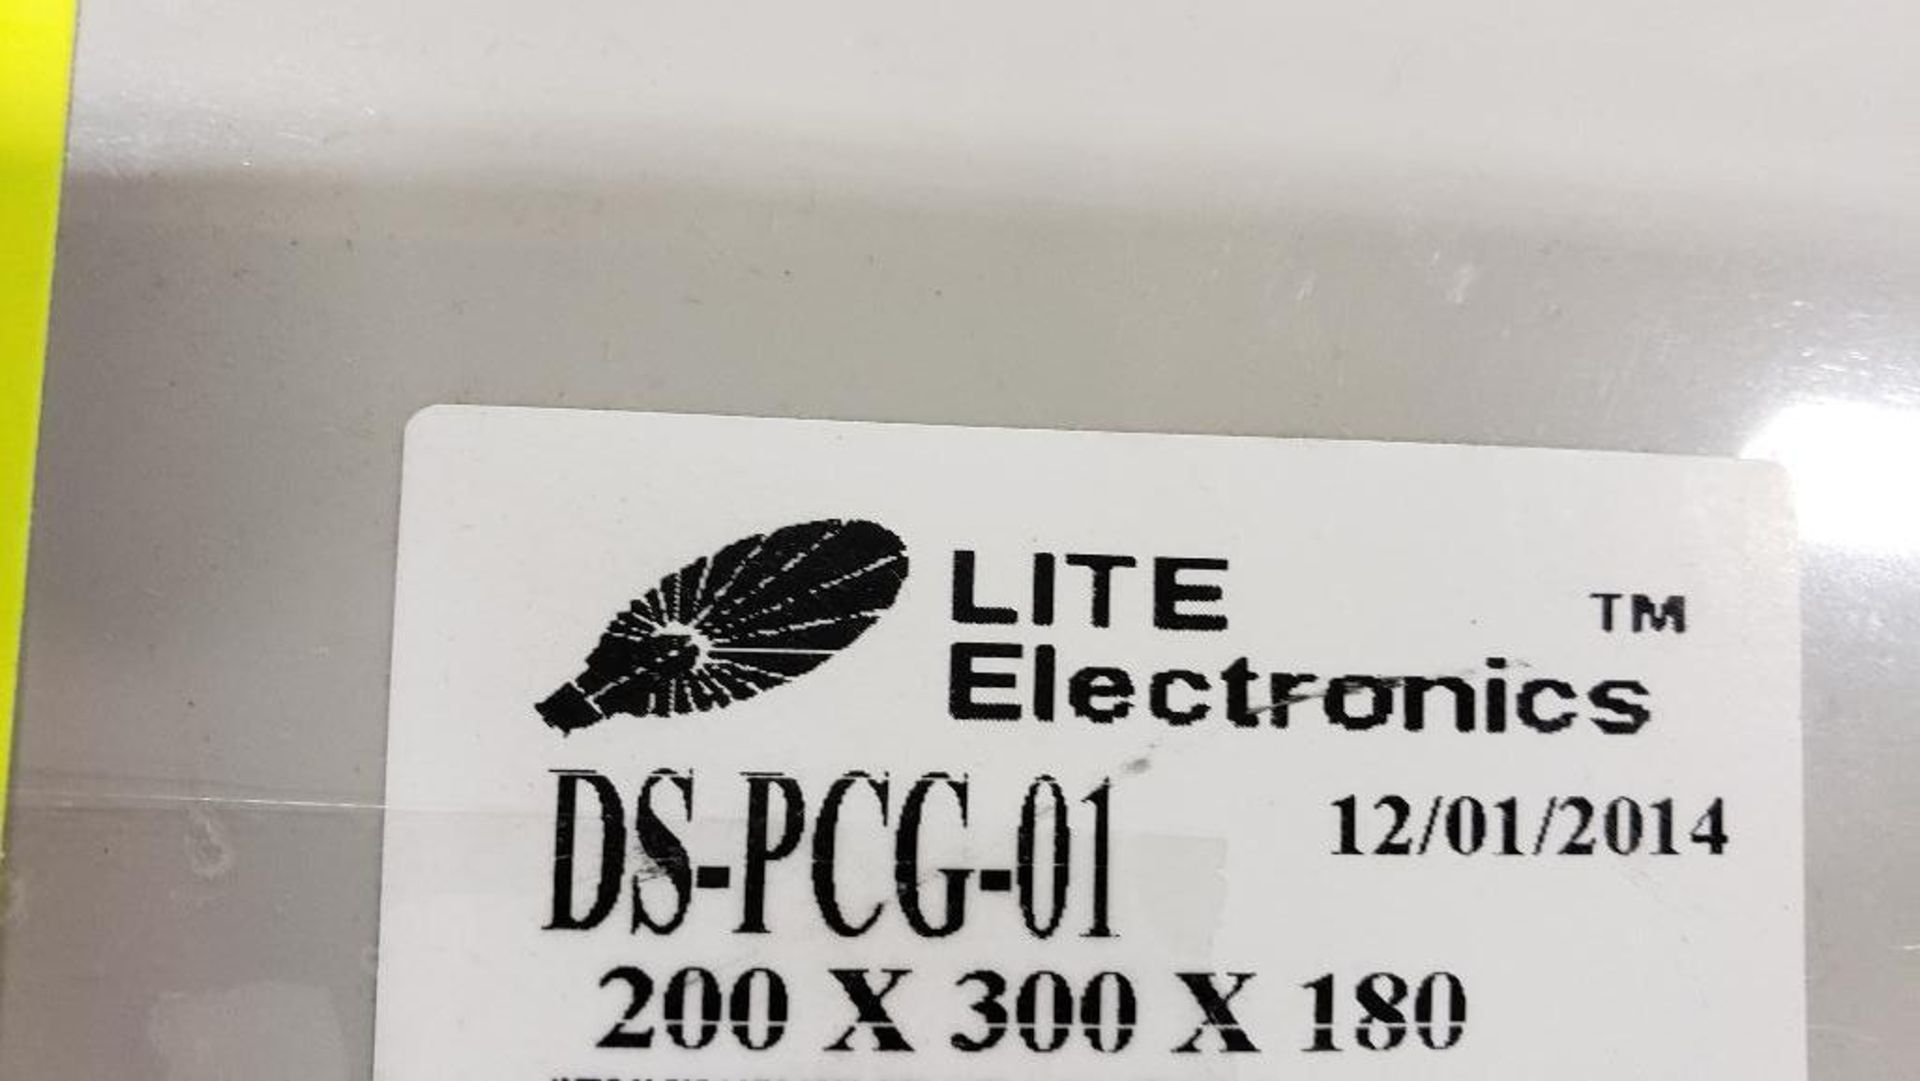 Qty 4 - LIte Electronics enclosure. 200x300x180mm. Model DS-PCG-01. New. - Image 4 of 4